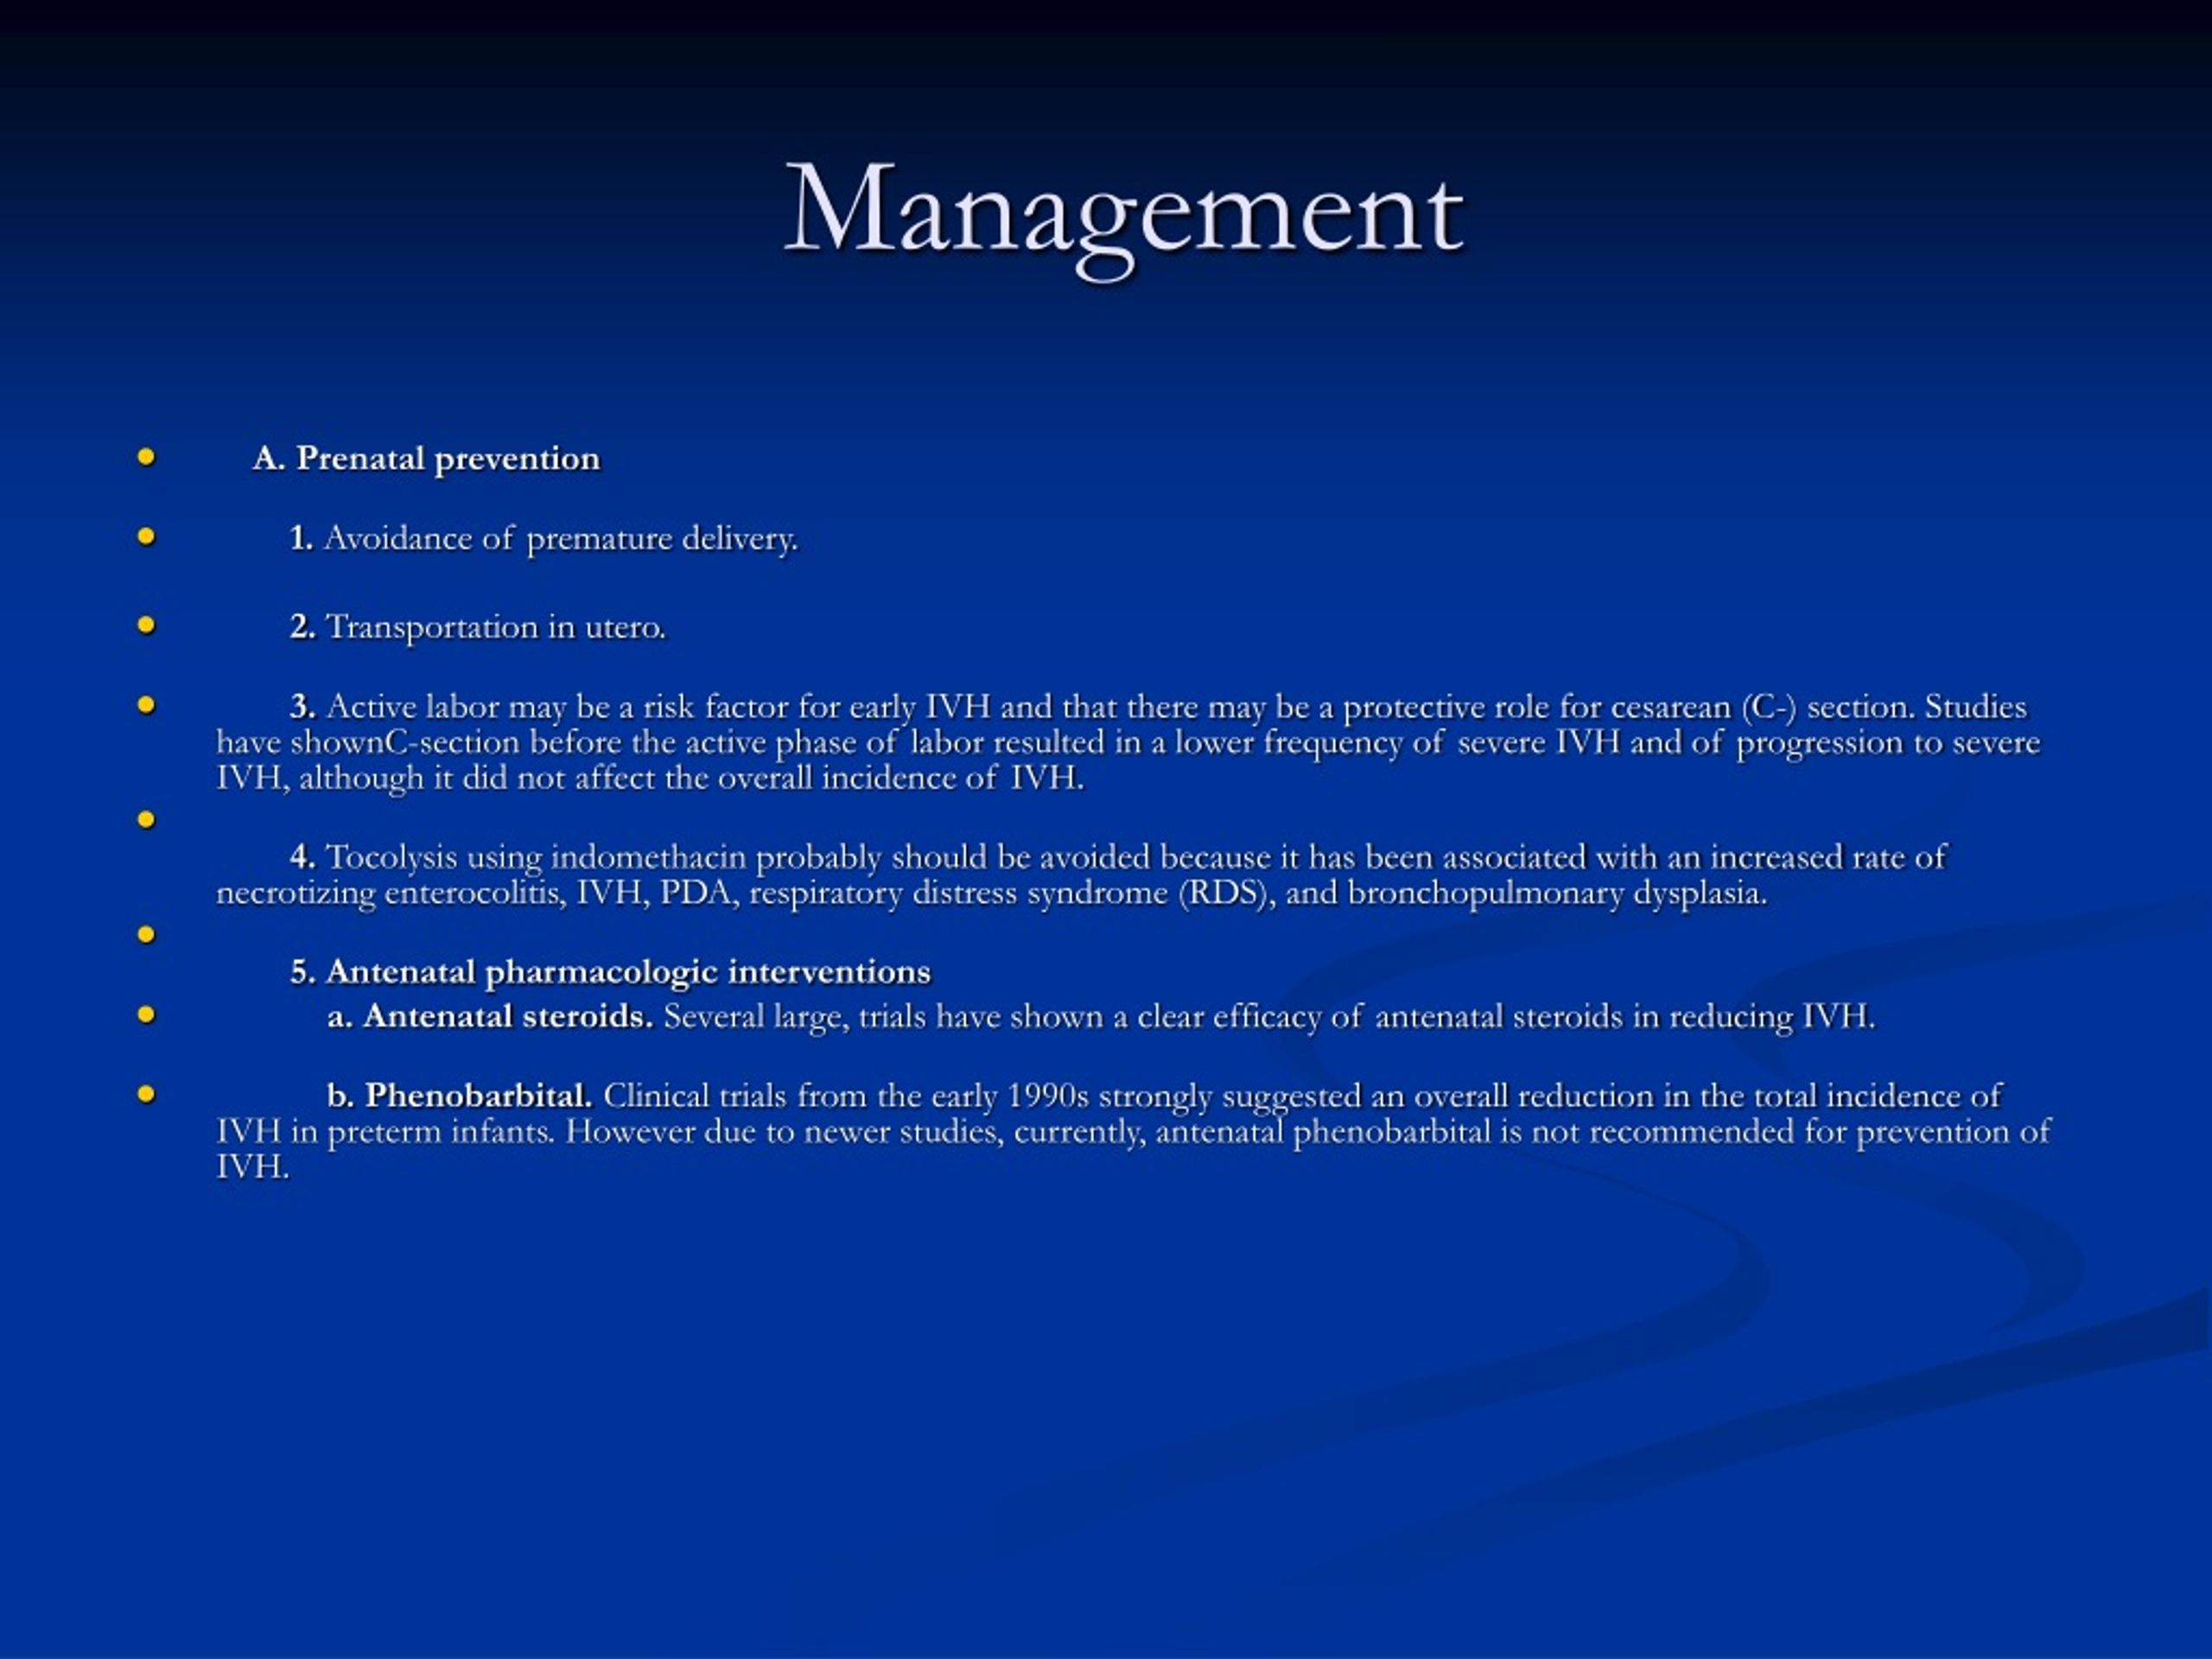 Ppt Intraventricular Hemorrhage Powerpoint Presentation Free